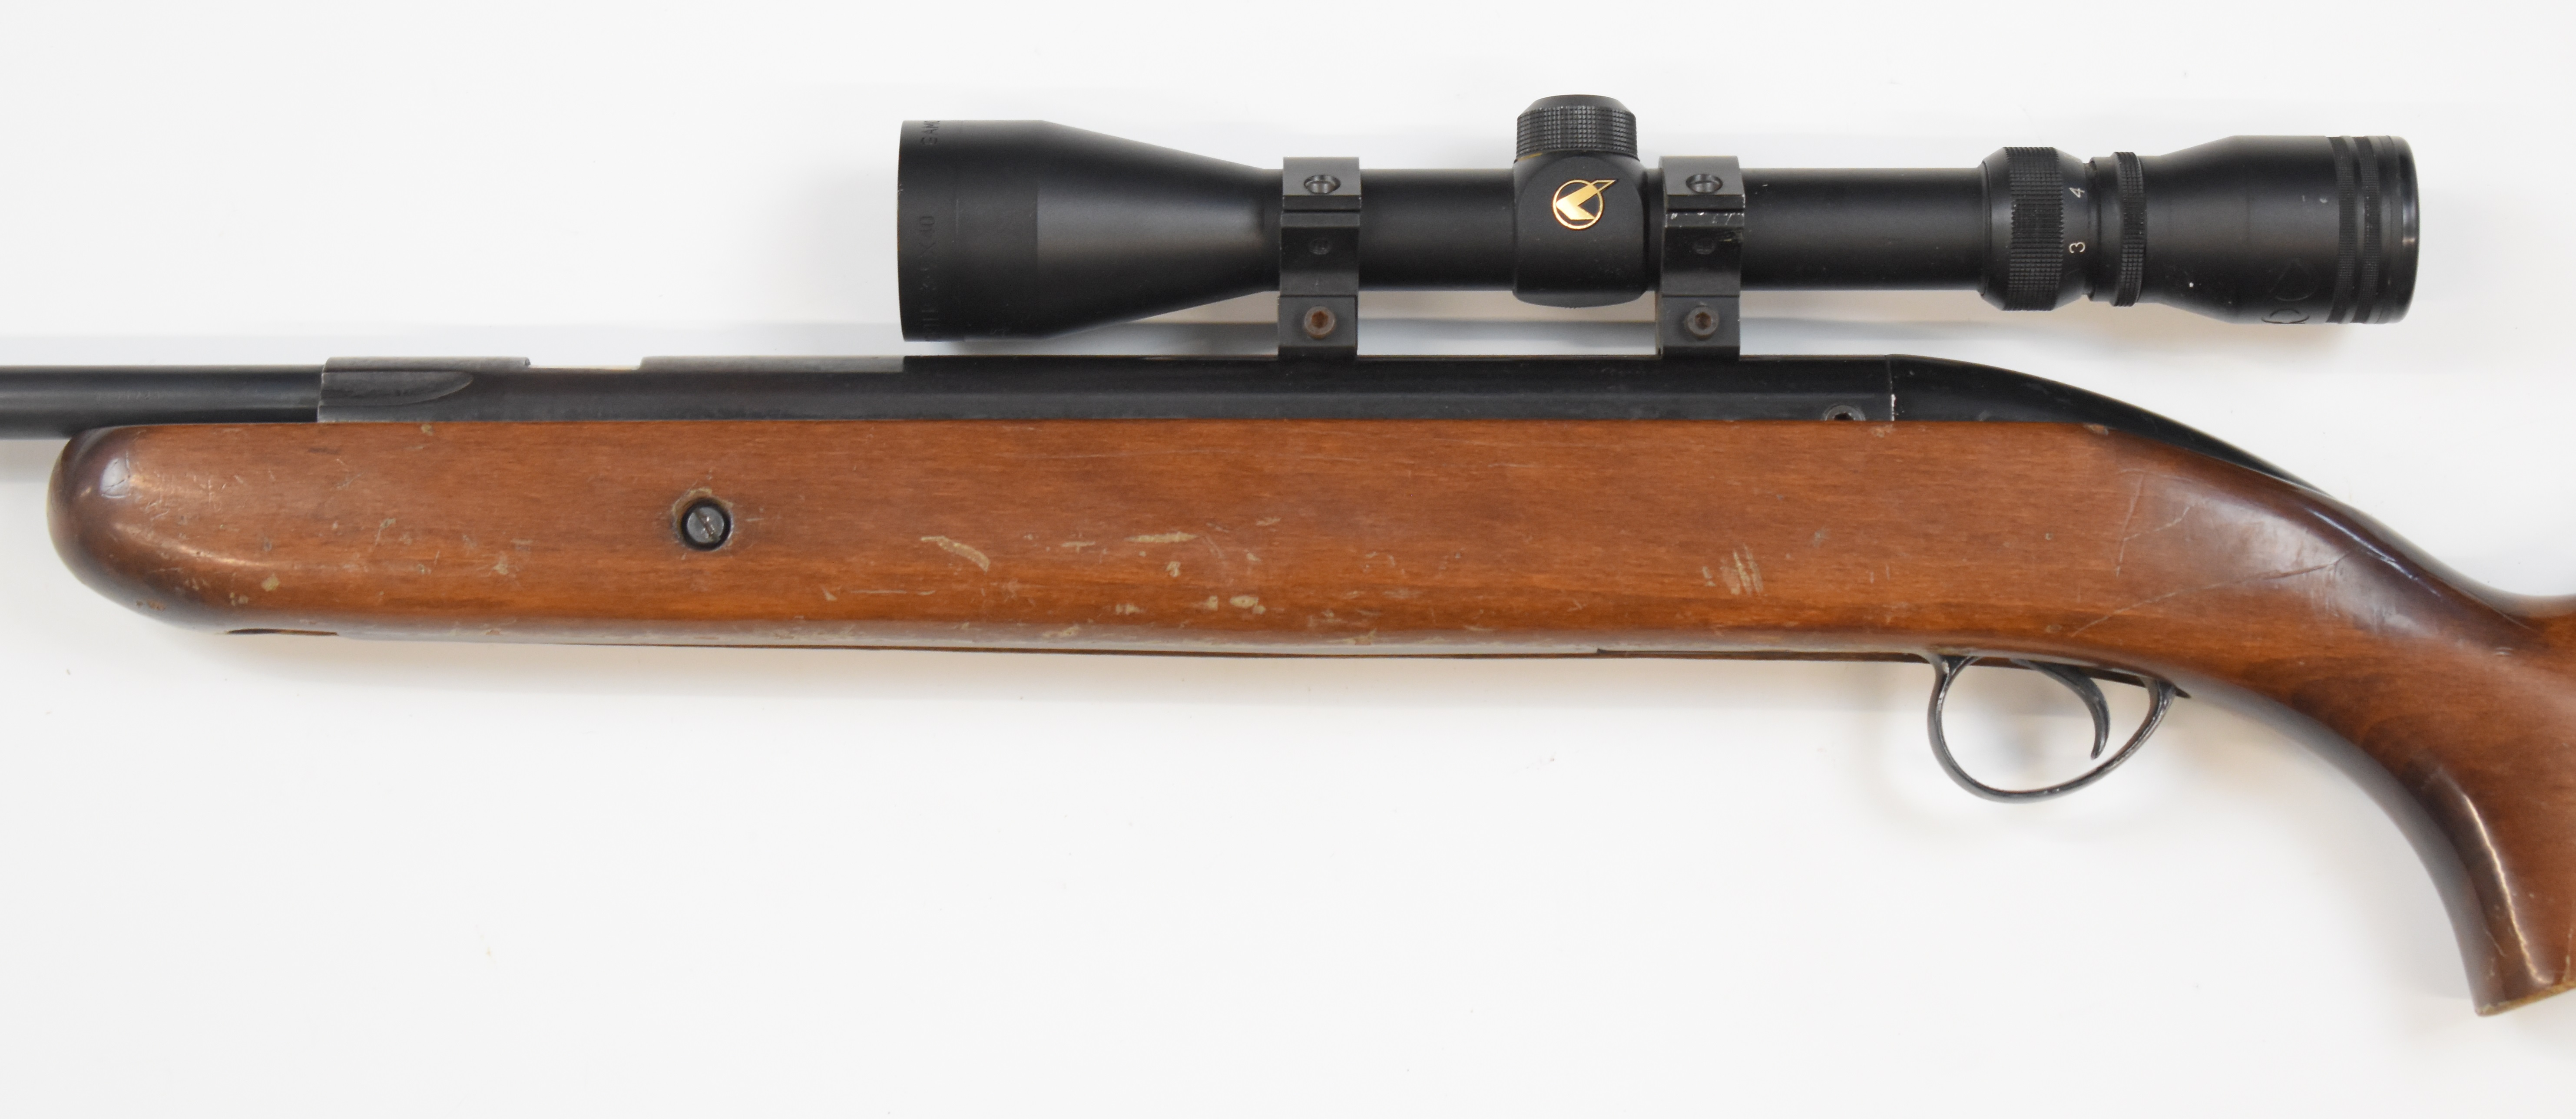 BSA Airsporter RB2 .22 under-lever air rifle with semi-pistol grip, raised cheek piece, sound - Image 8 of 9